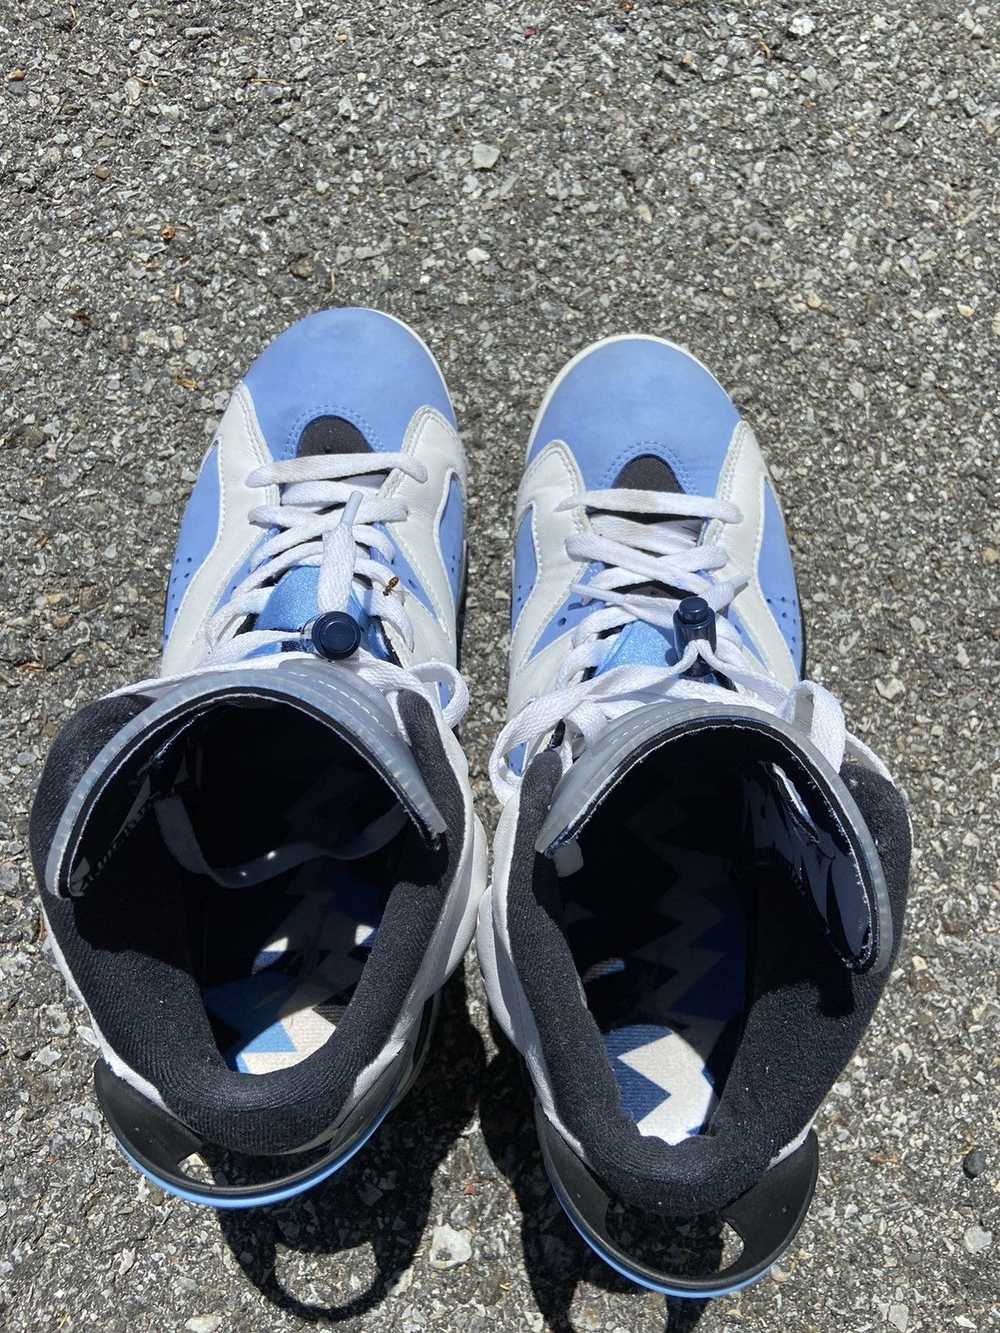 Jordan Brand × Nike UNC jordan 6s - image 4